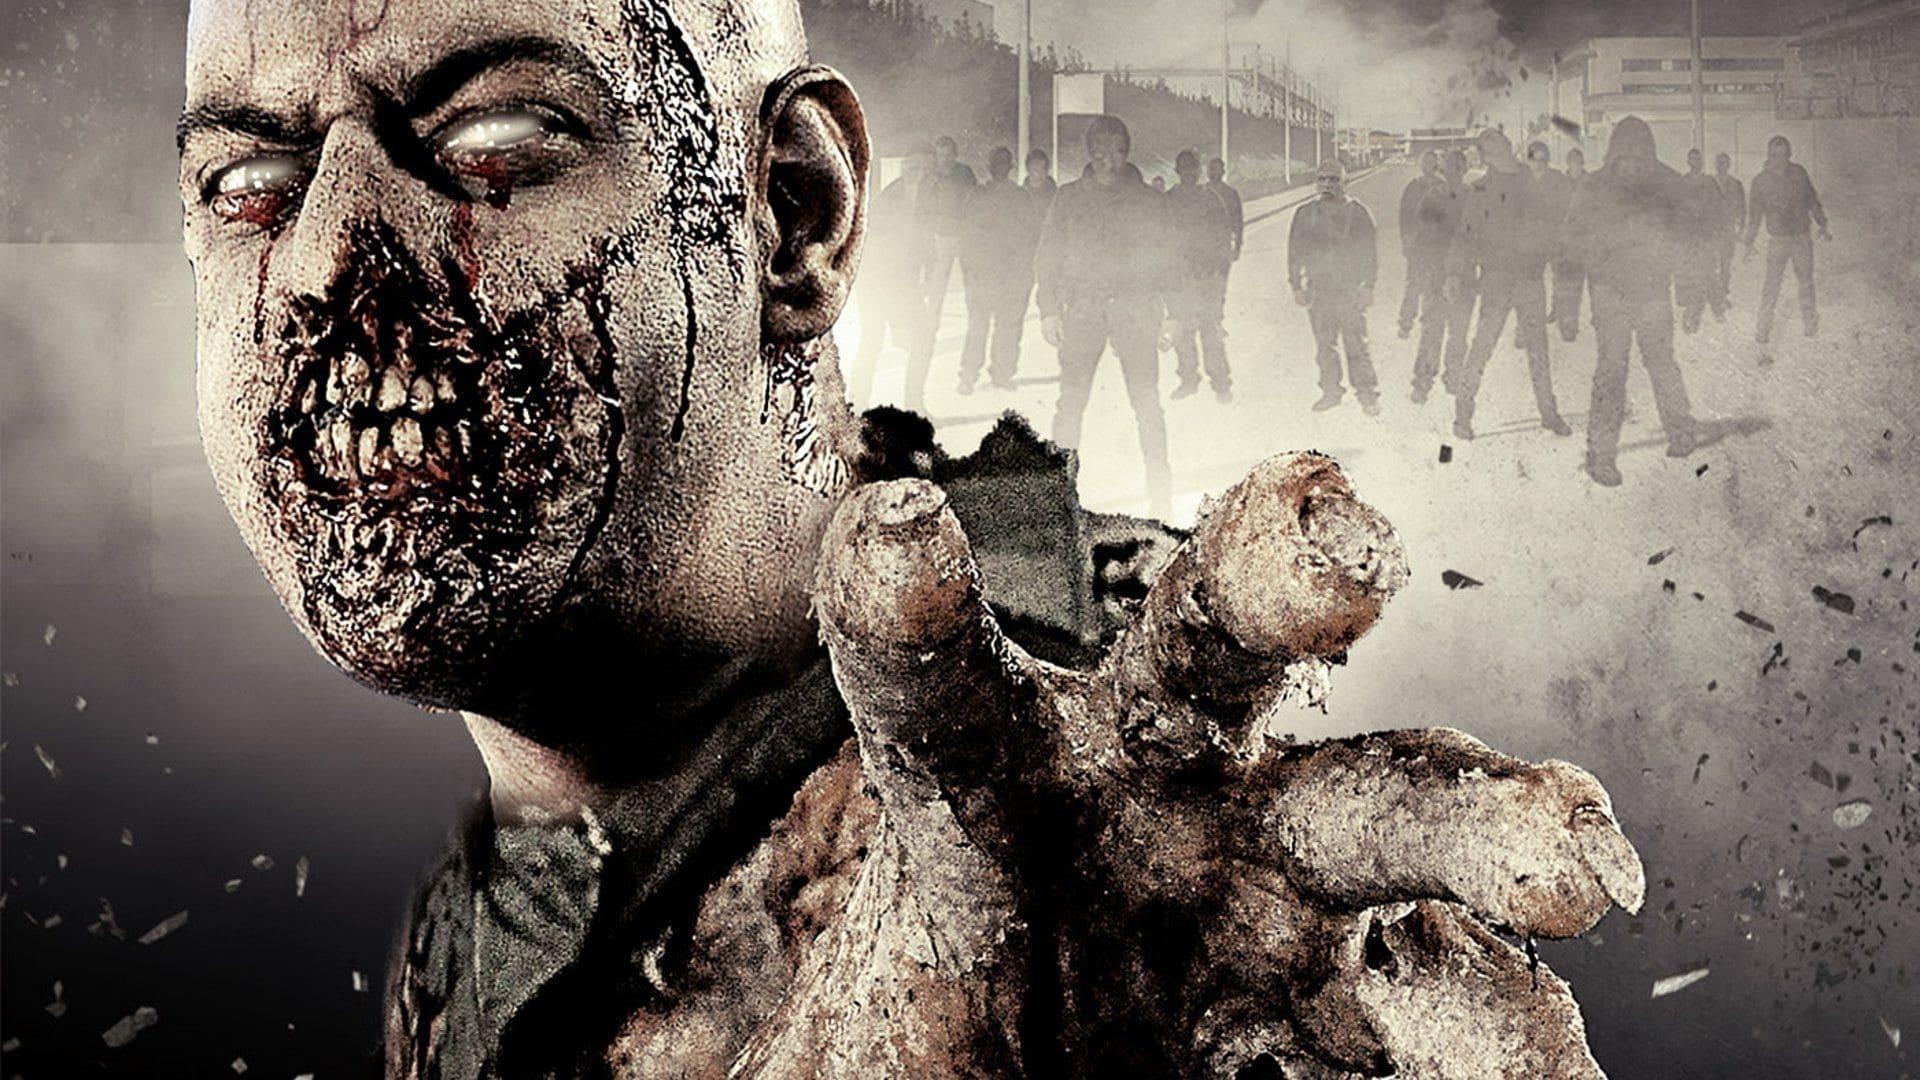 Zombie Massacre backdrop